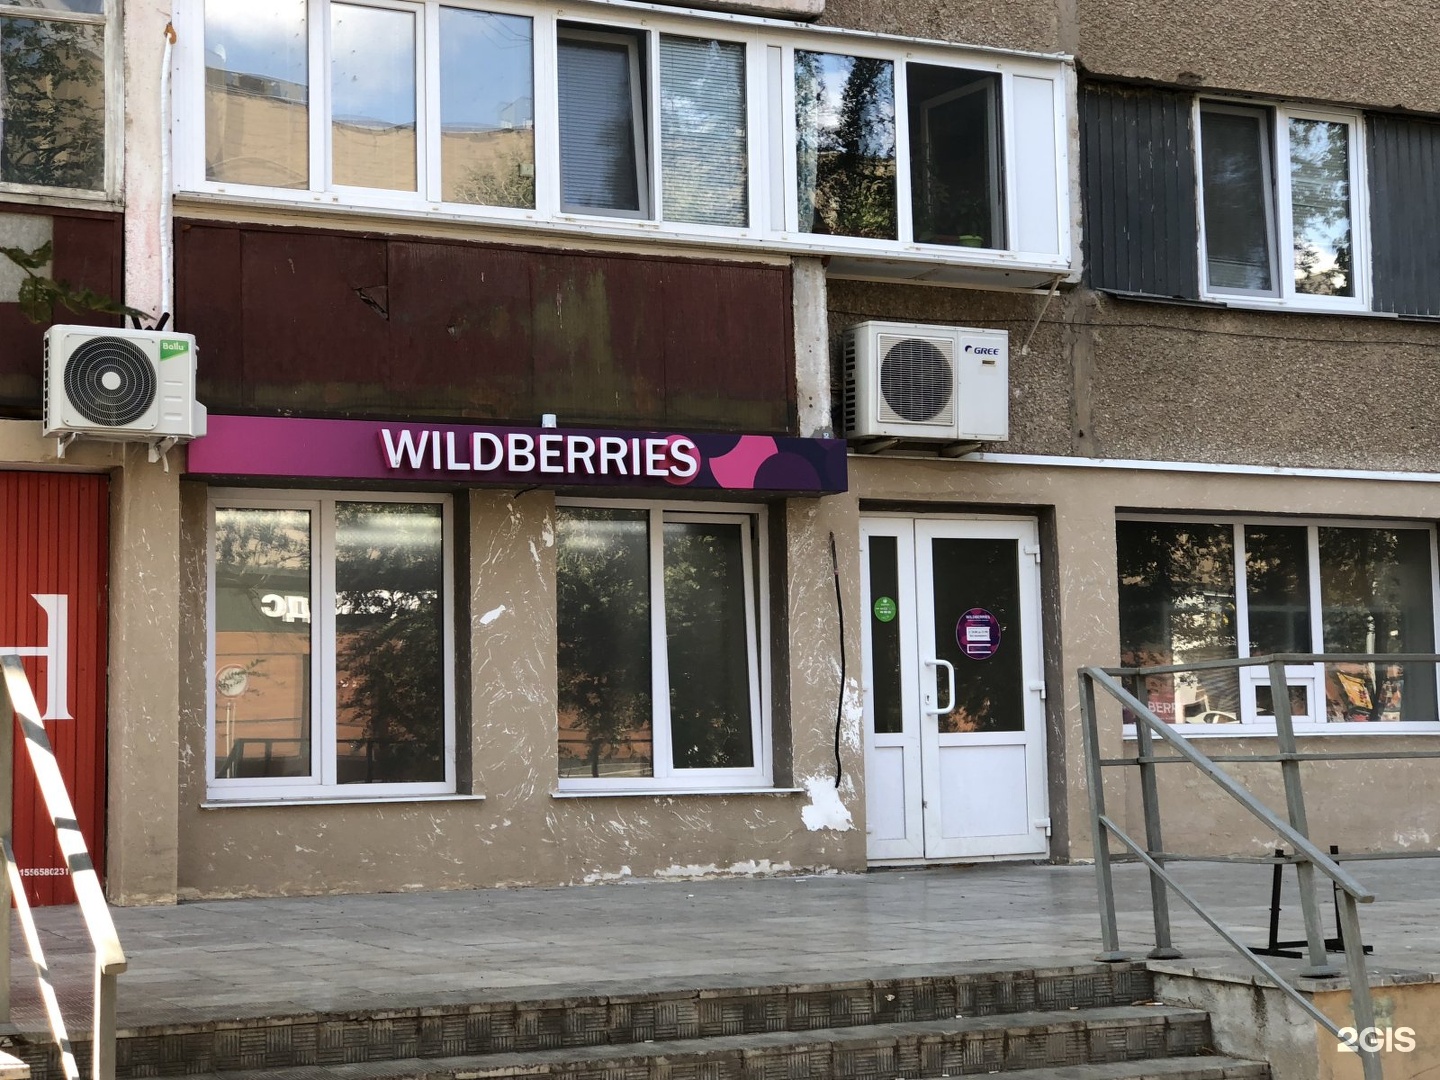 Wildberries Интернет Магазин Оренбург Официальный